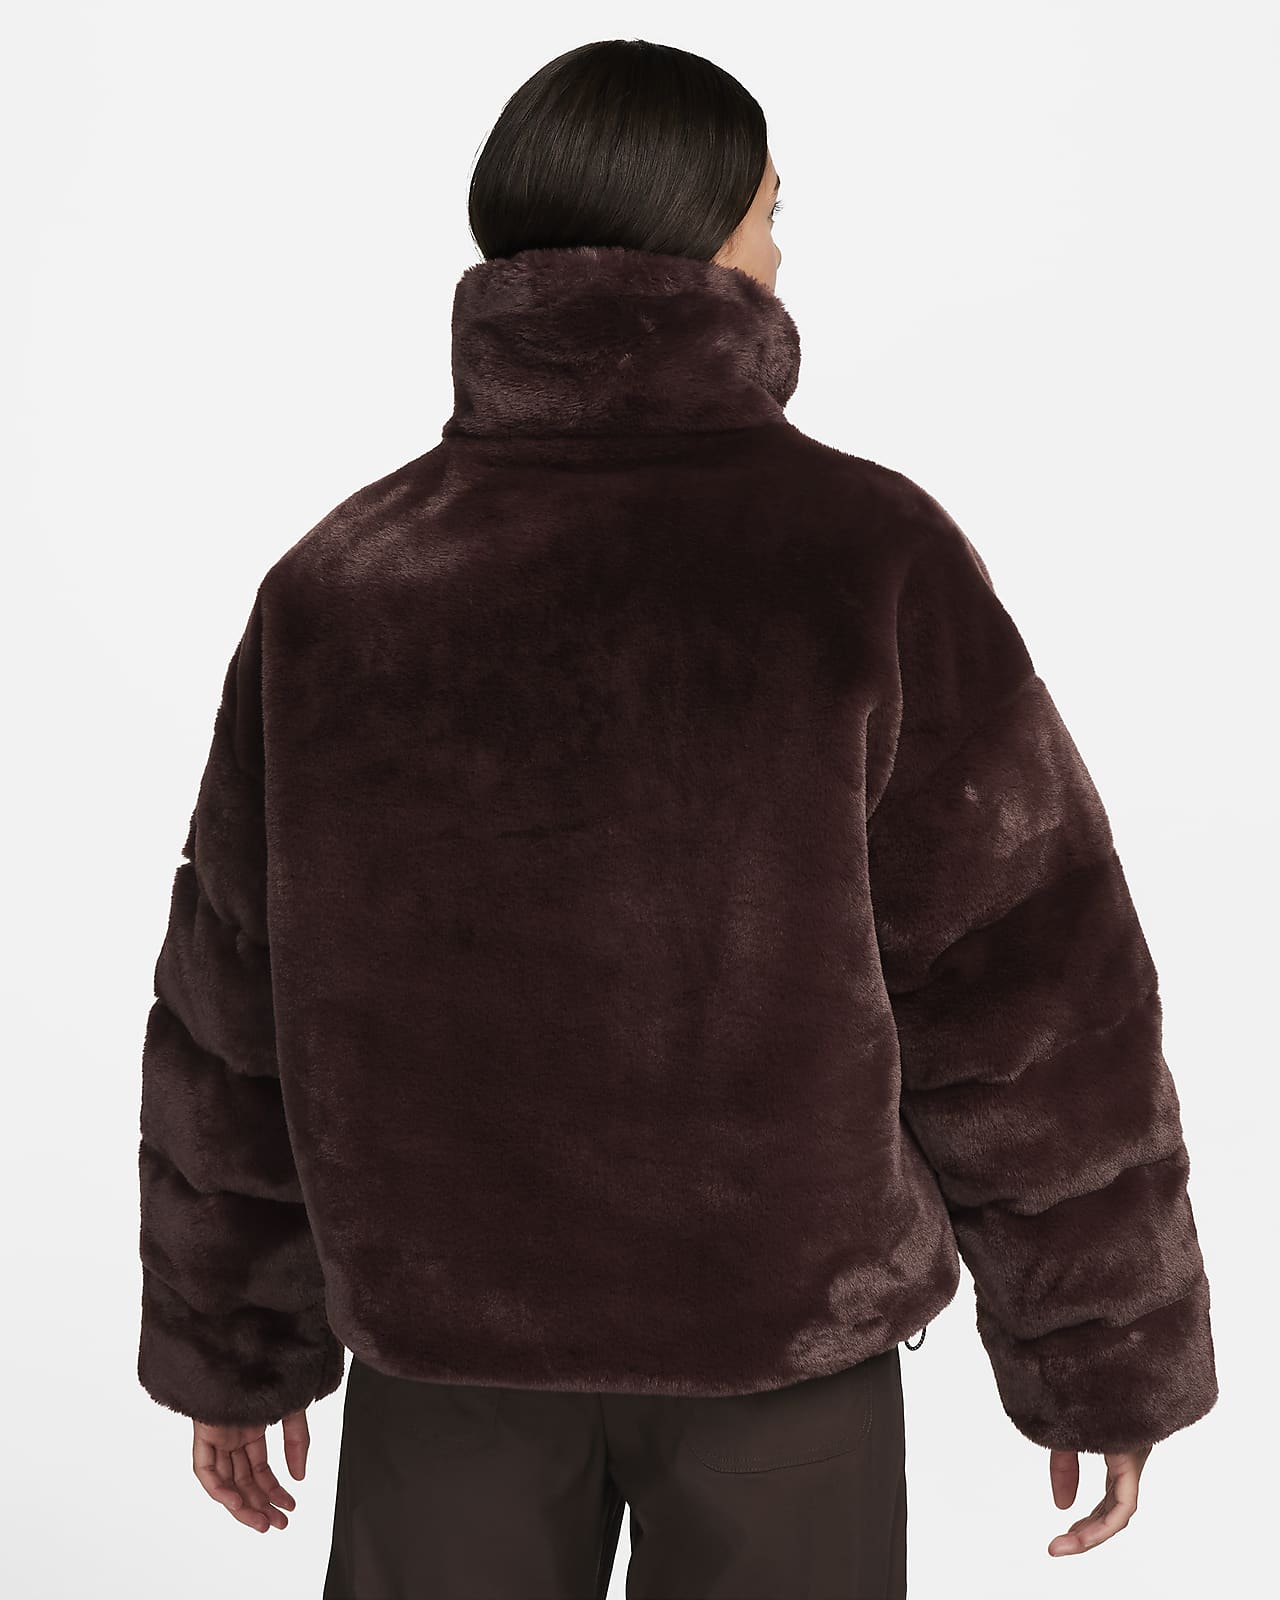 Fluffy Faux Fur Jacket with Hood Size Small Fuzzy Coat Burning Shaggy Man  Soft S - Coats & jackets